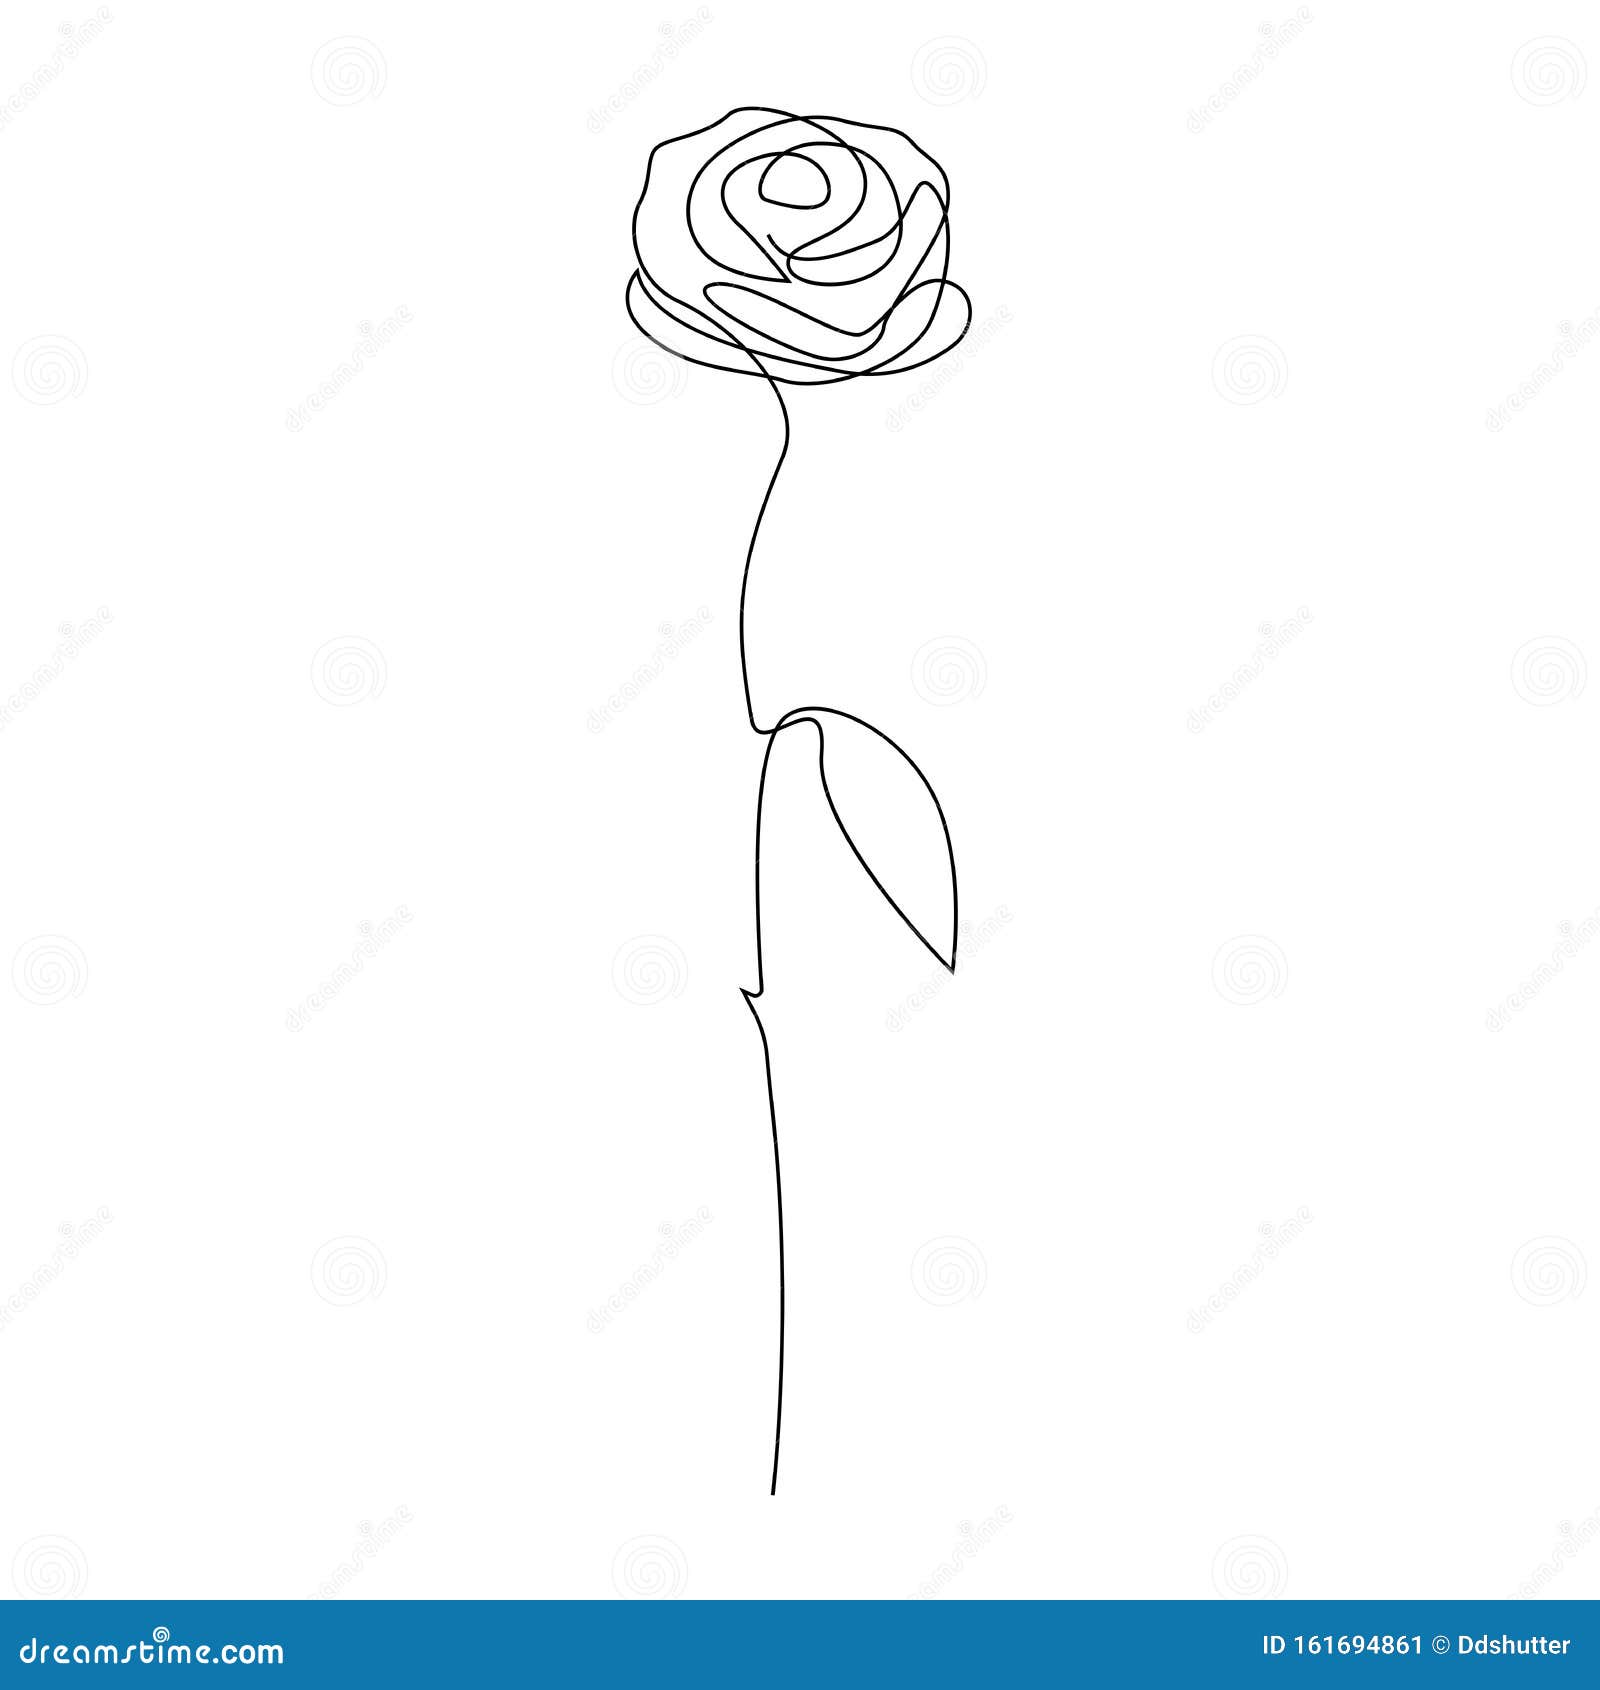 One Line Hand Drawn Rose Long Stem Rose Single Line Flower Vector Illustration Stock Vector Illustration Of Draw Birthday 161694861